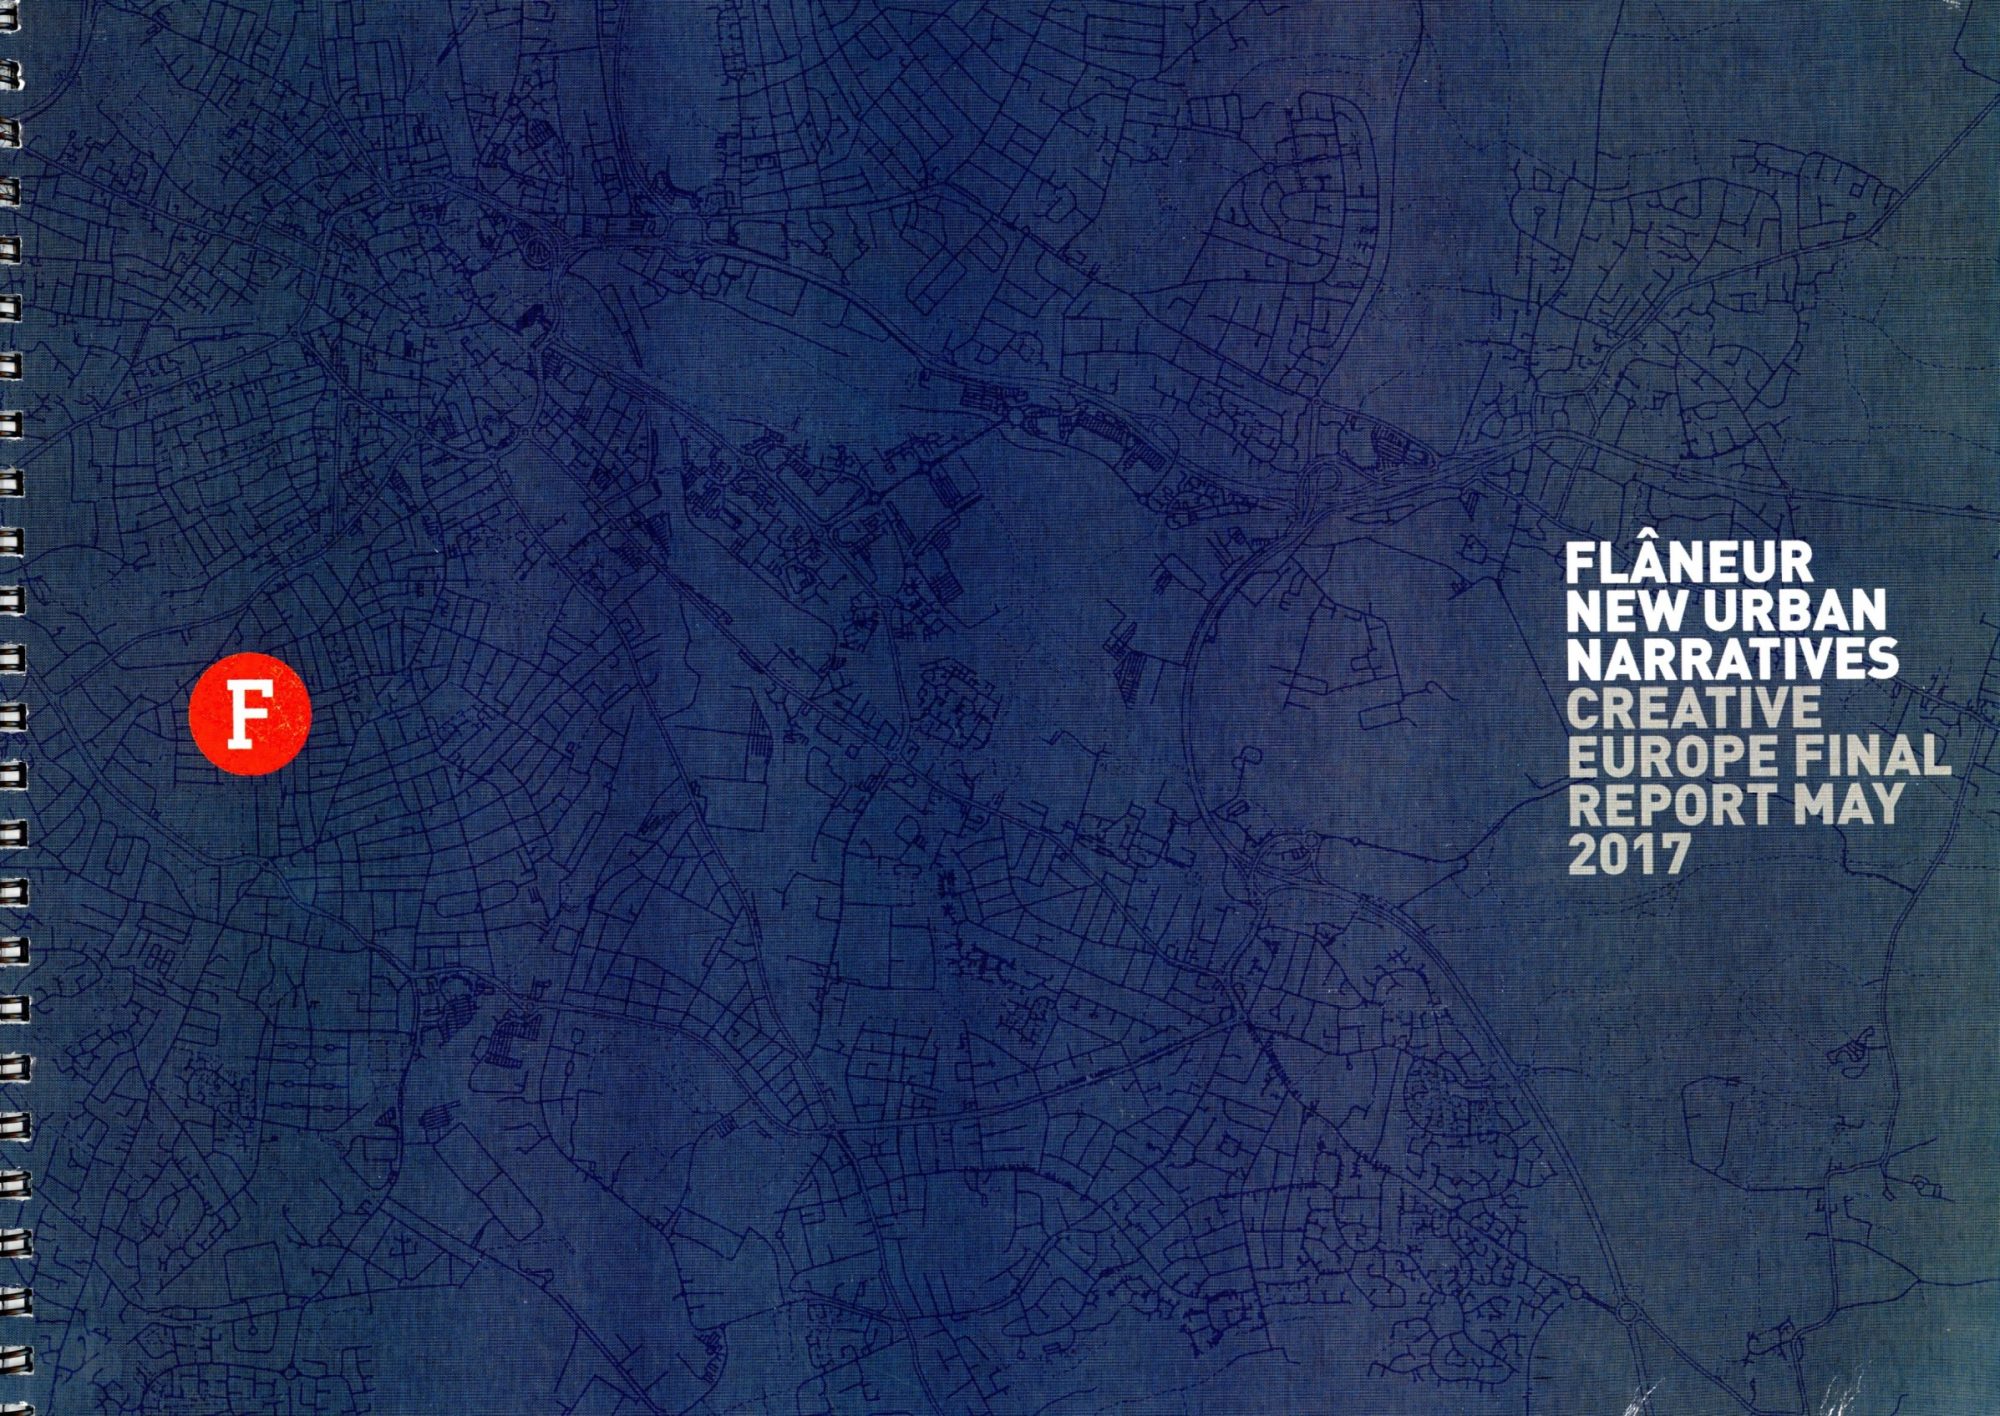 Flâneur: New Urban Narratives - Creative Europe Final Report May 2017